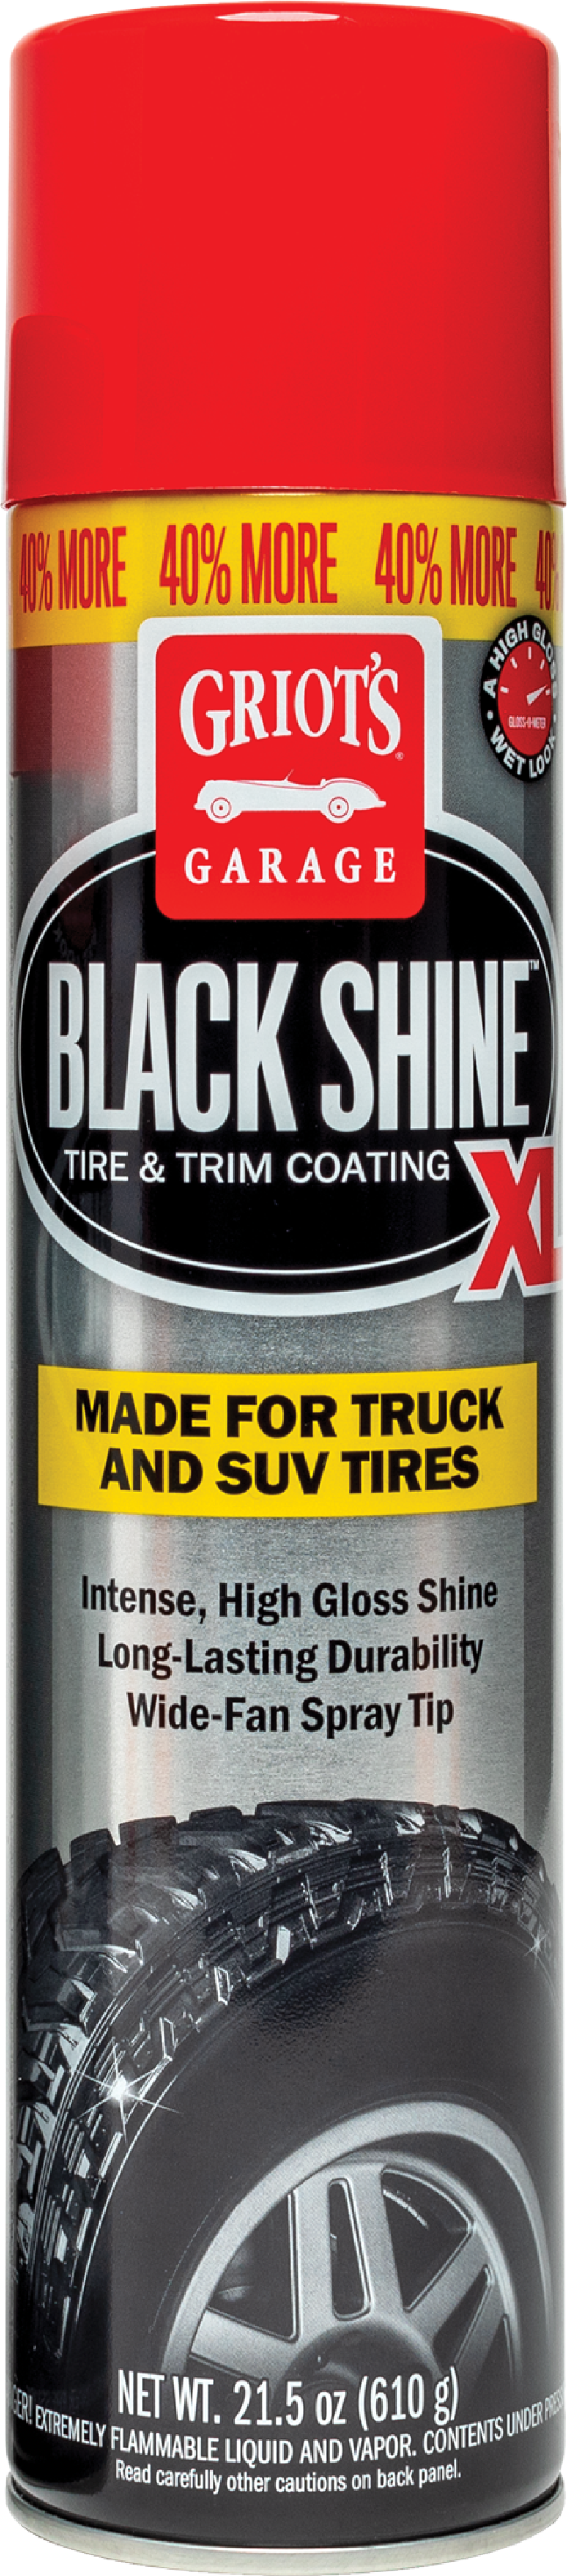 GRIOT'S GARAGE Black Shine Tire and Trim Coating XL - 21.5oz - Case of 6